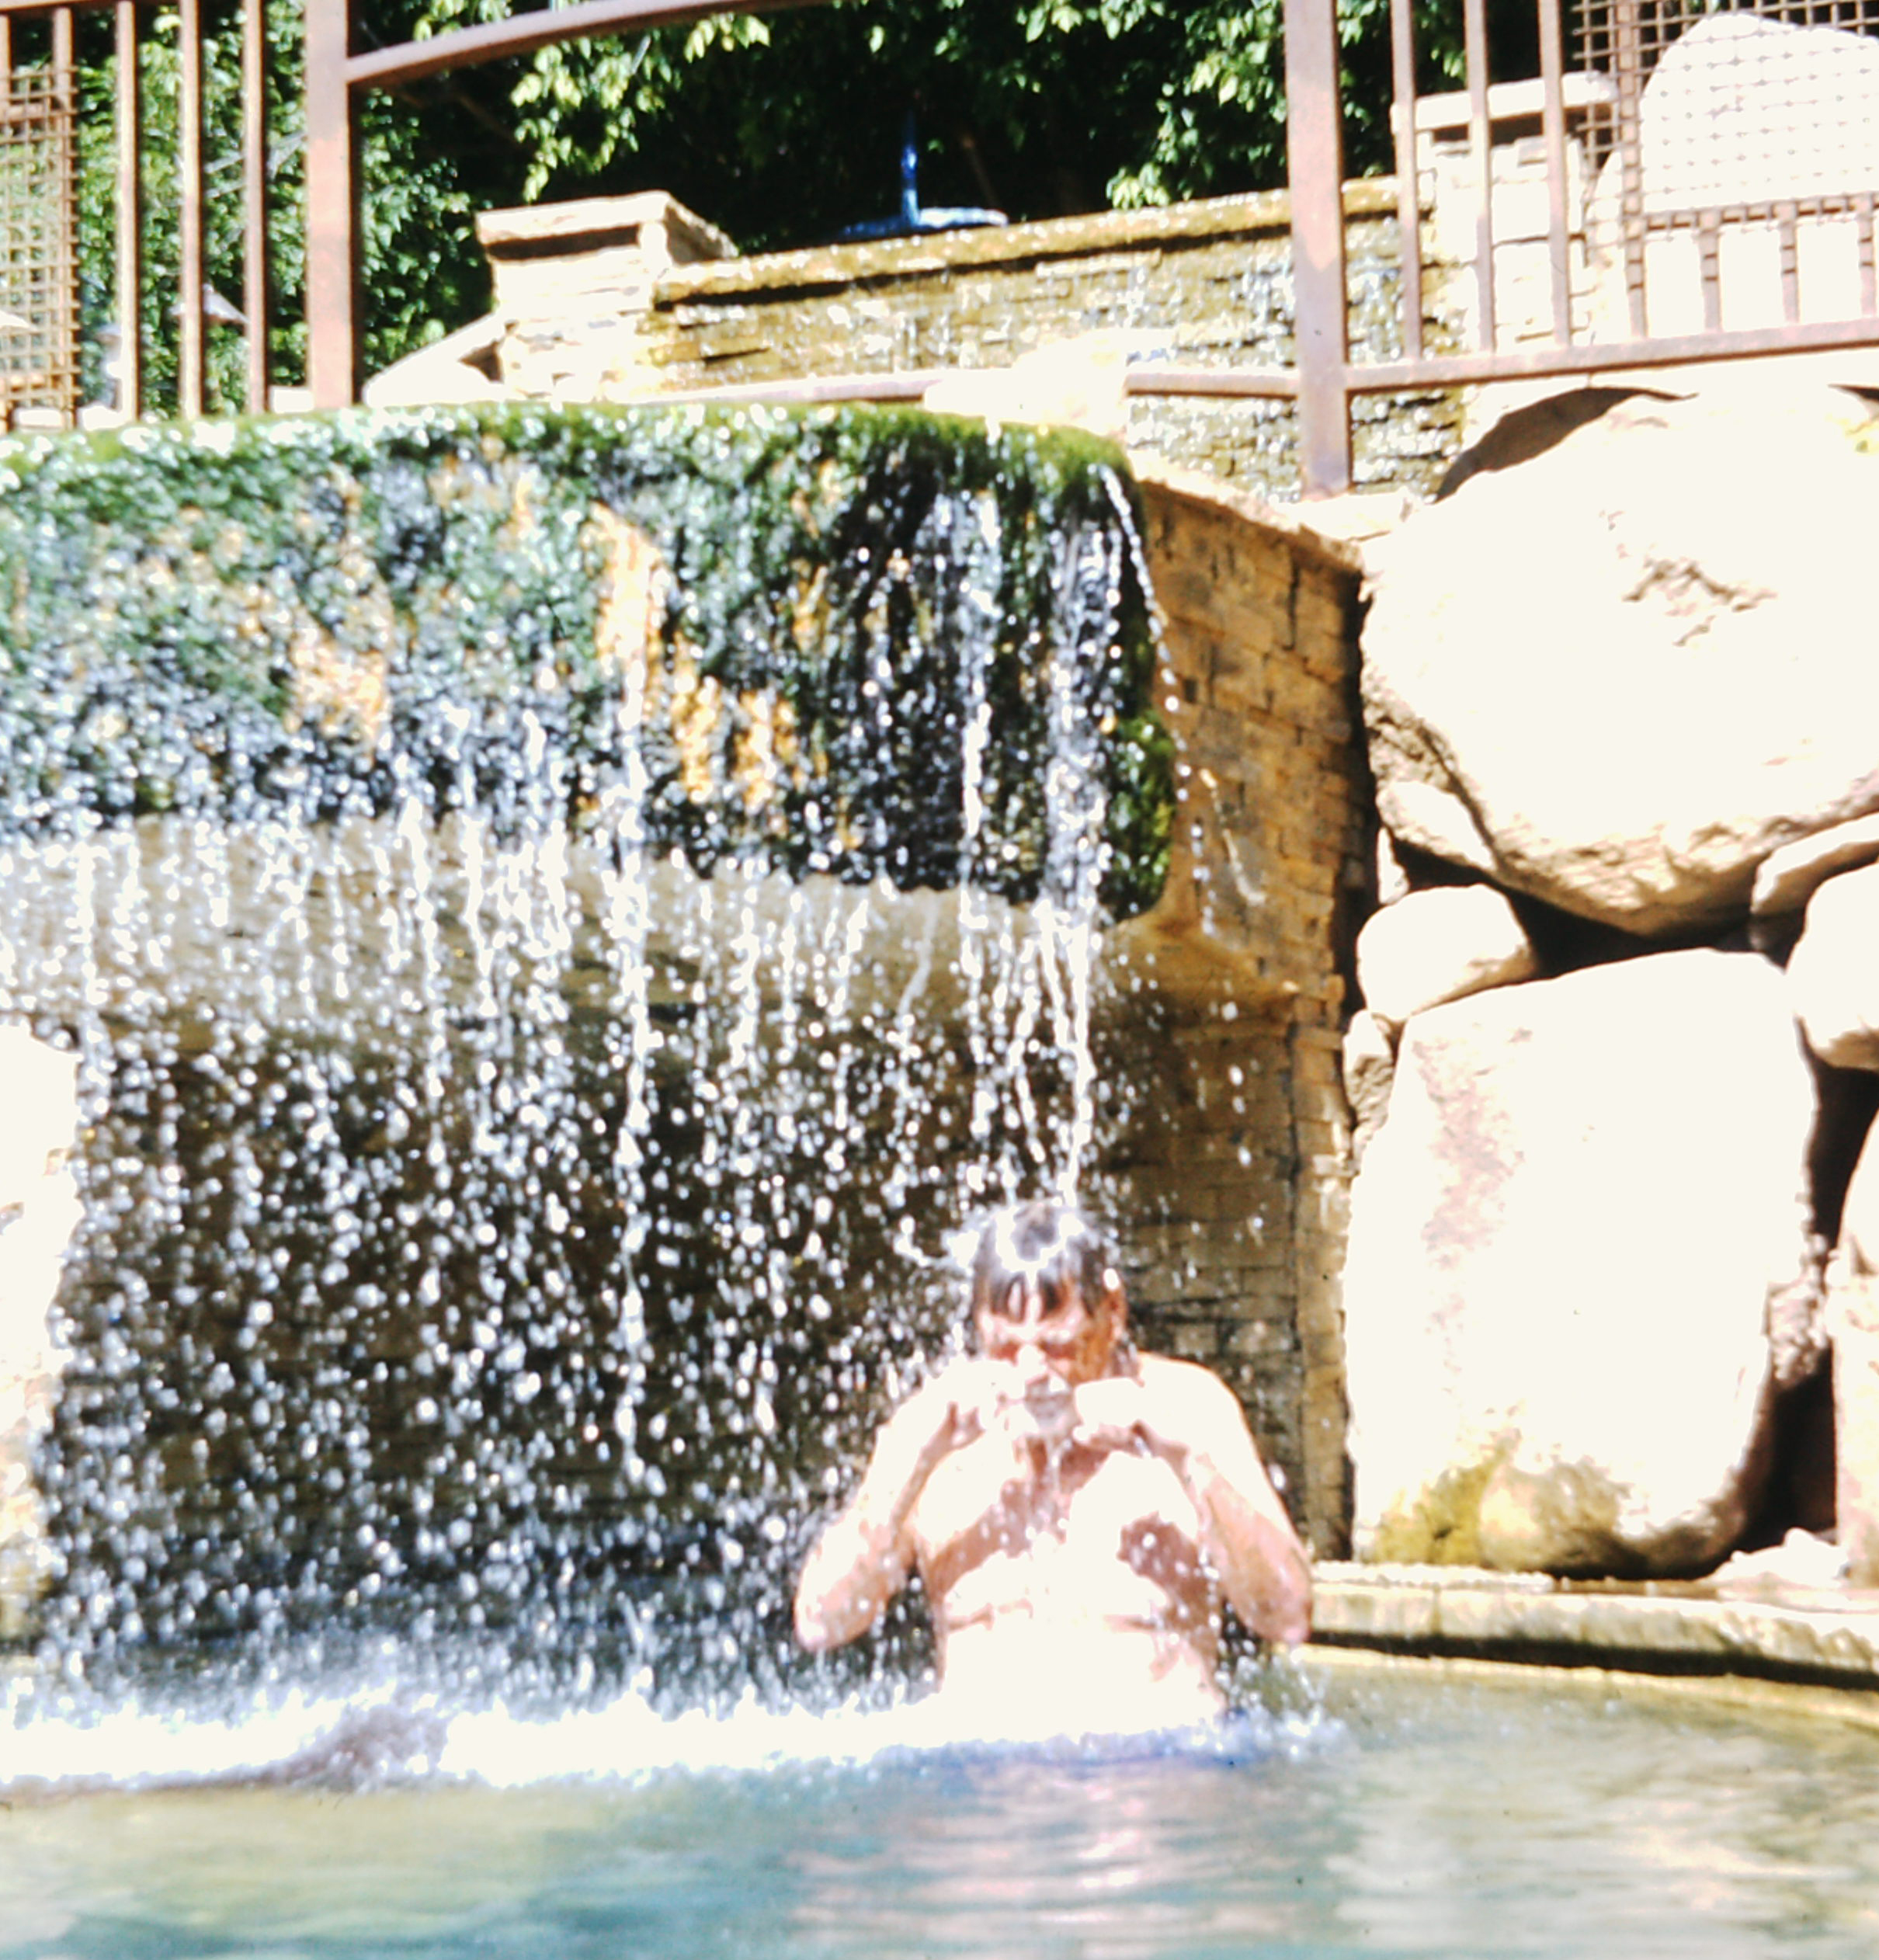 Tom enjoying the hot springs at Avalanche Ranch  